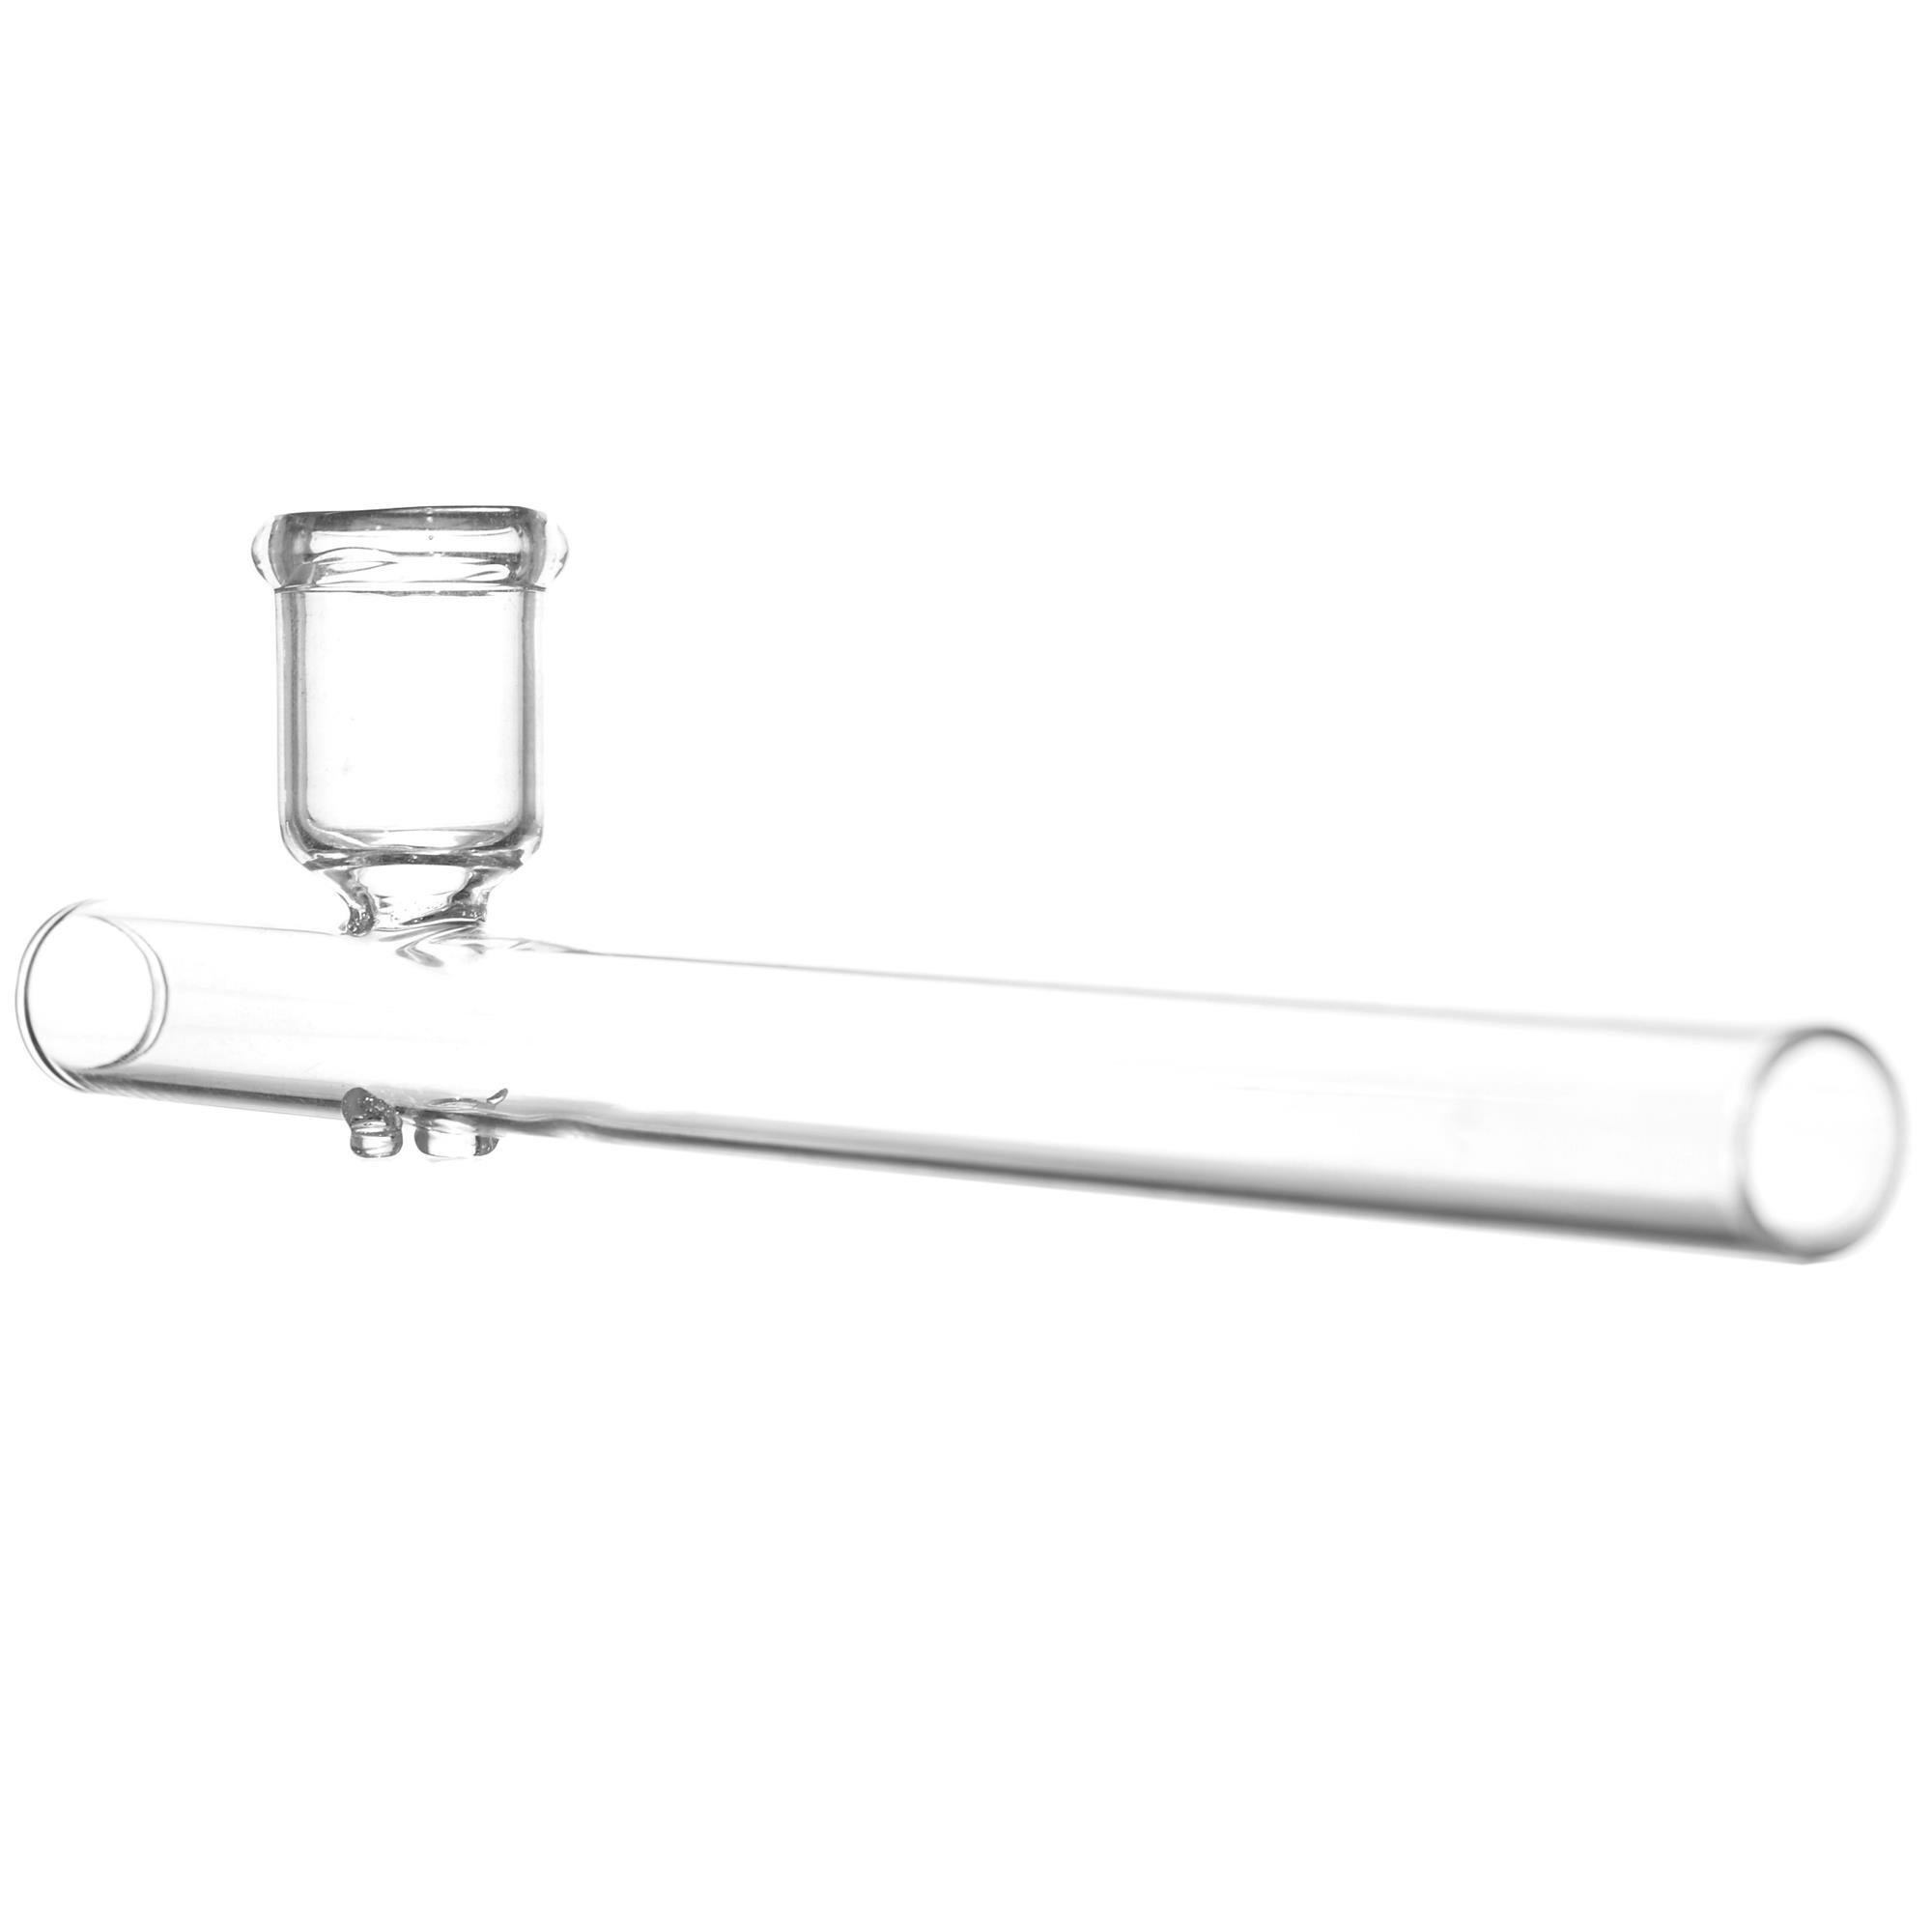 SCIENTIFIC STEMROLLER GLASS HAND PIPE